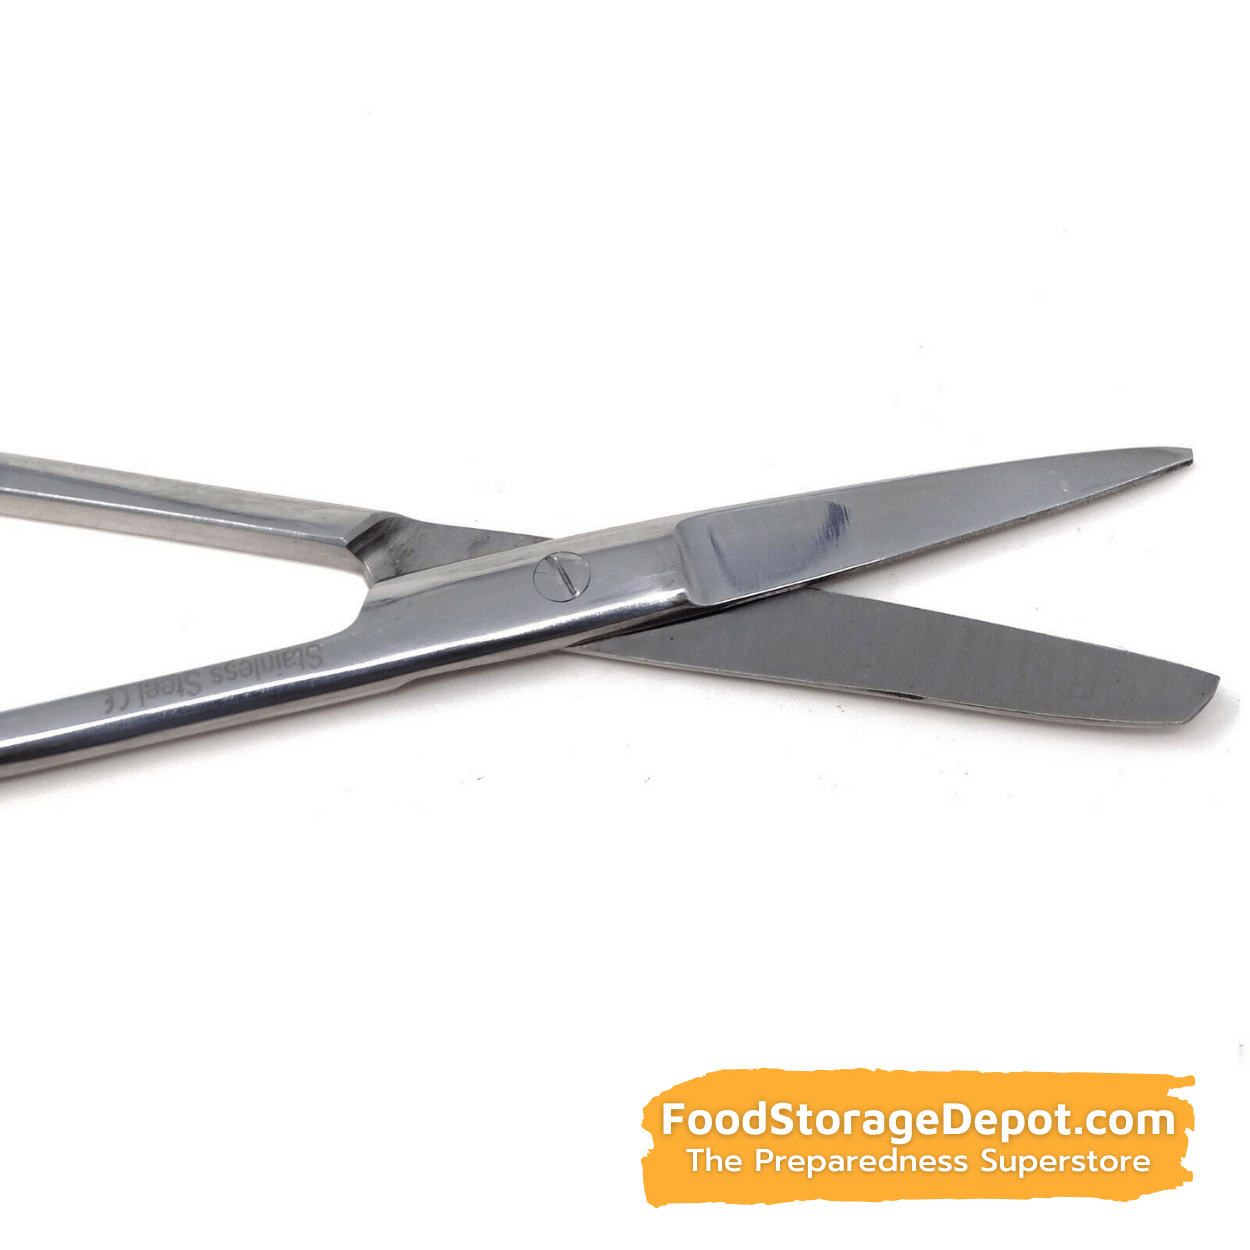 Emergency Stainless-Steel Sharp-Blunt Point Scissors (5.5")